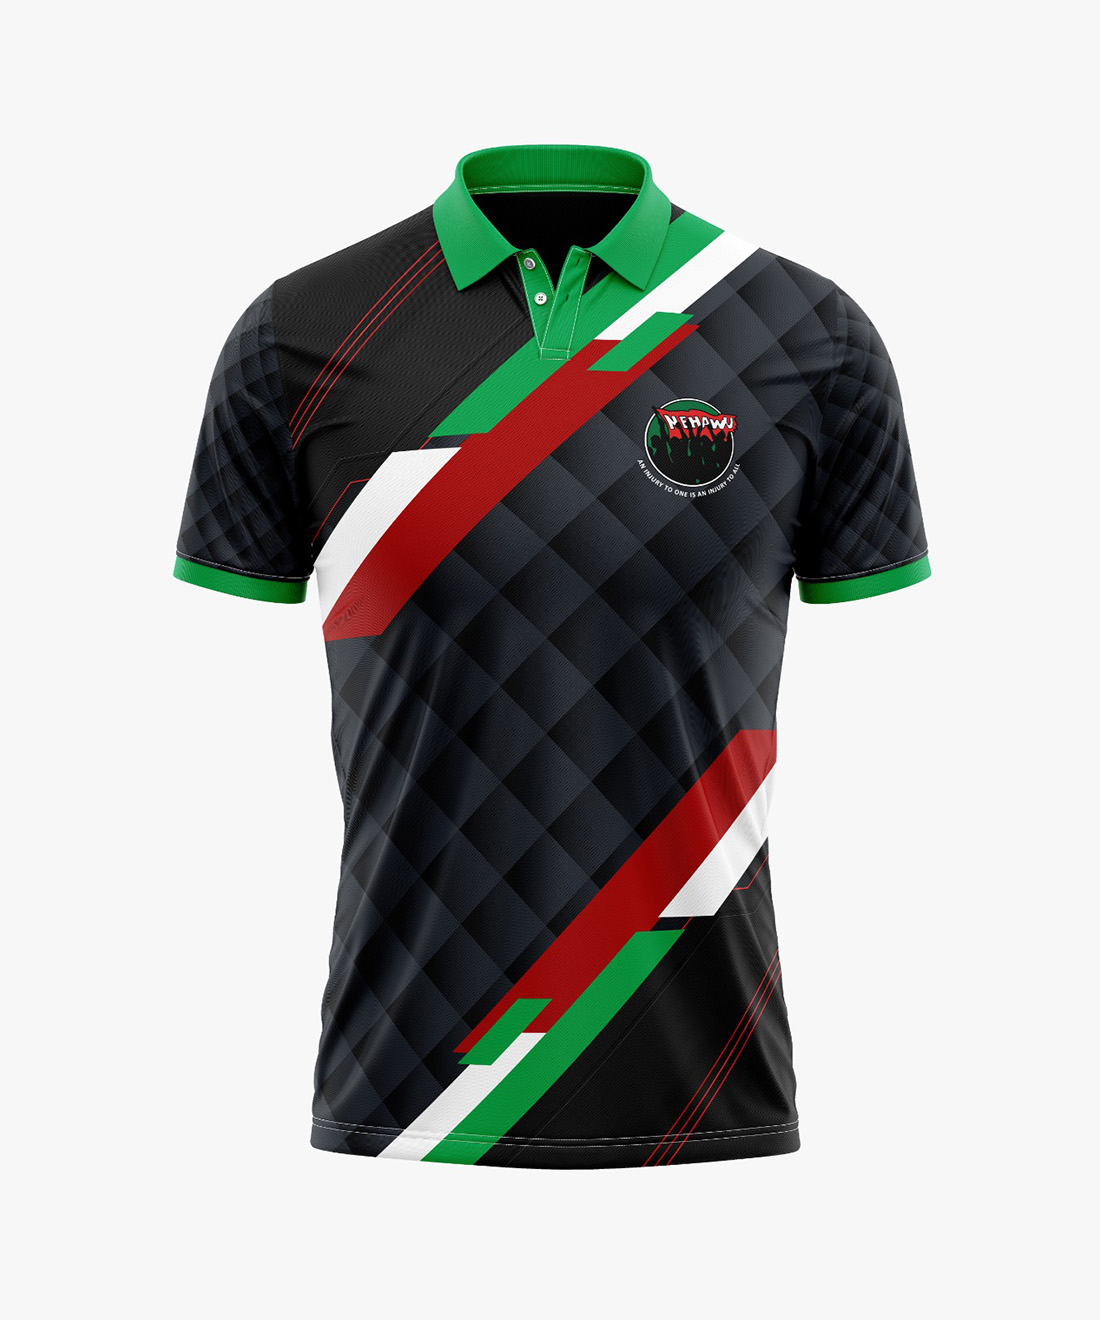 Polo Shirt - CRC Clothing & Branding